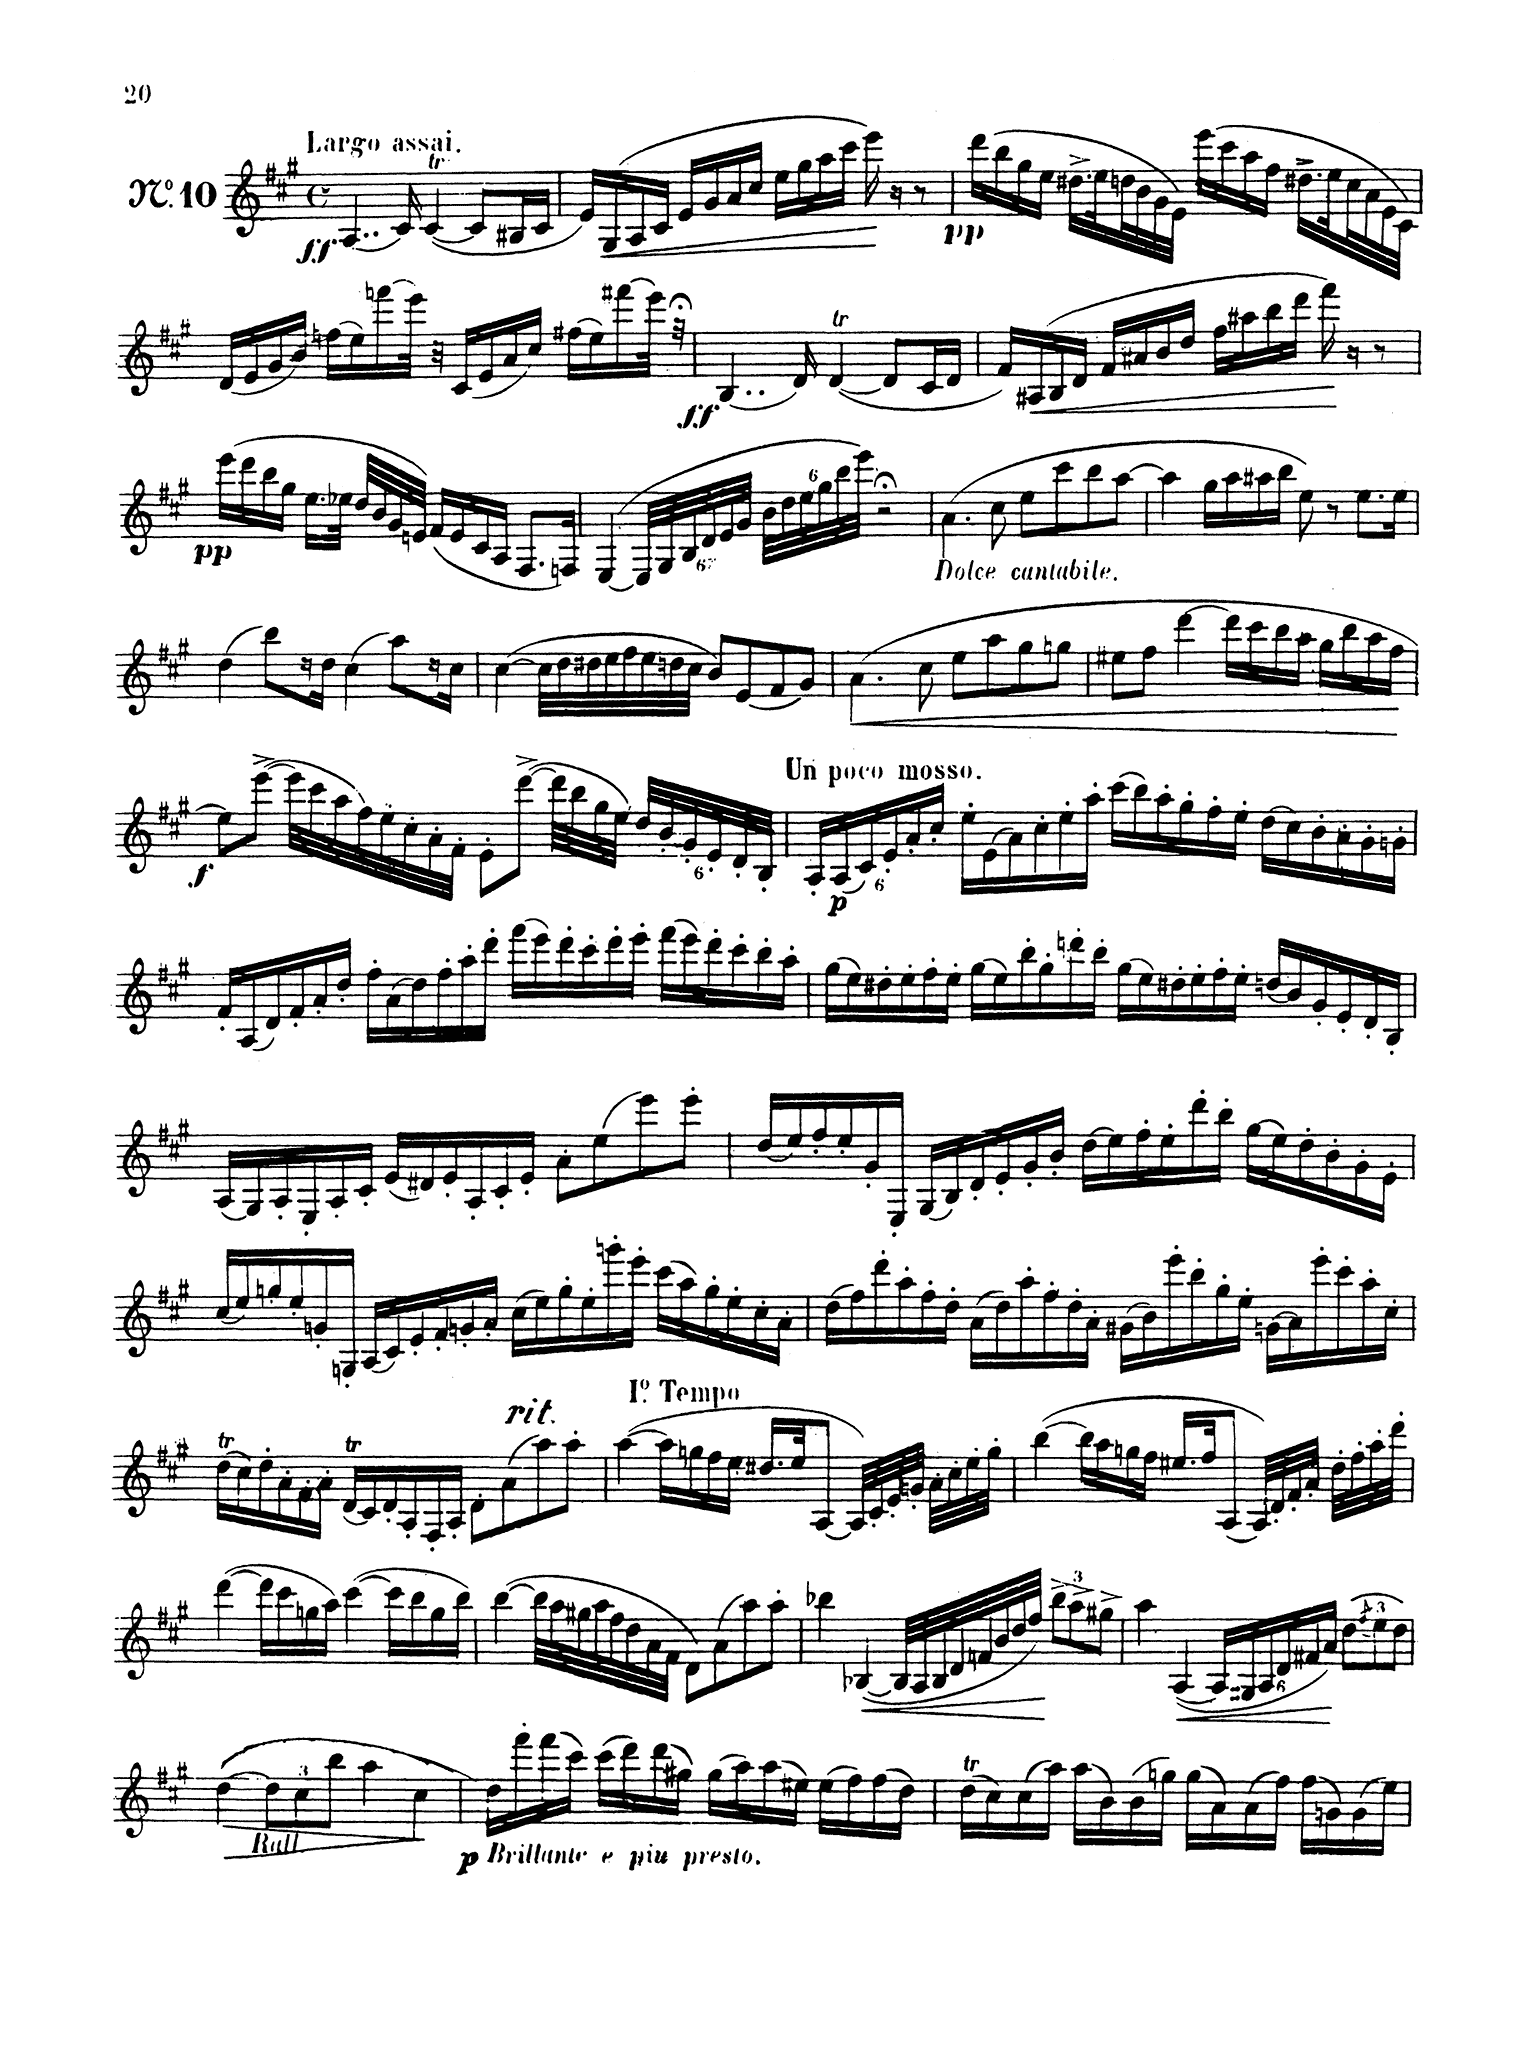 Magnani 10 Studi Capriccio of Great Difficulty for Clarinet No. 10